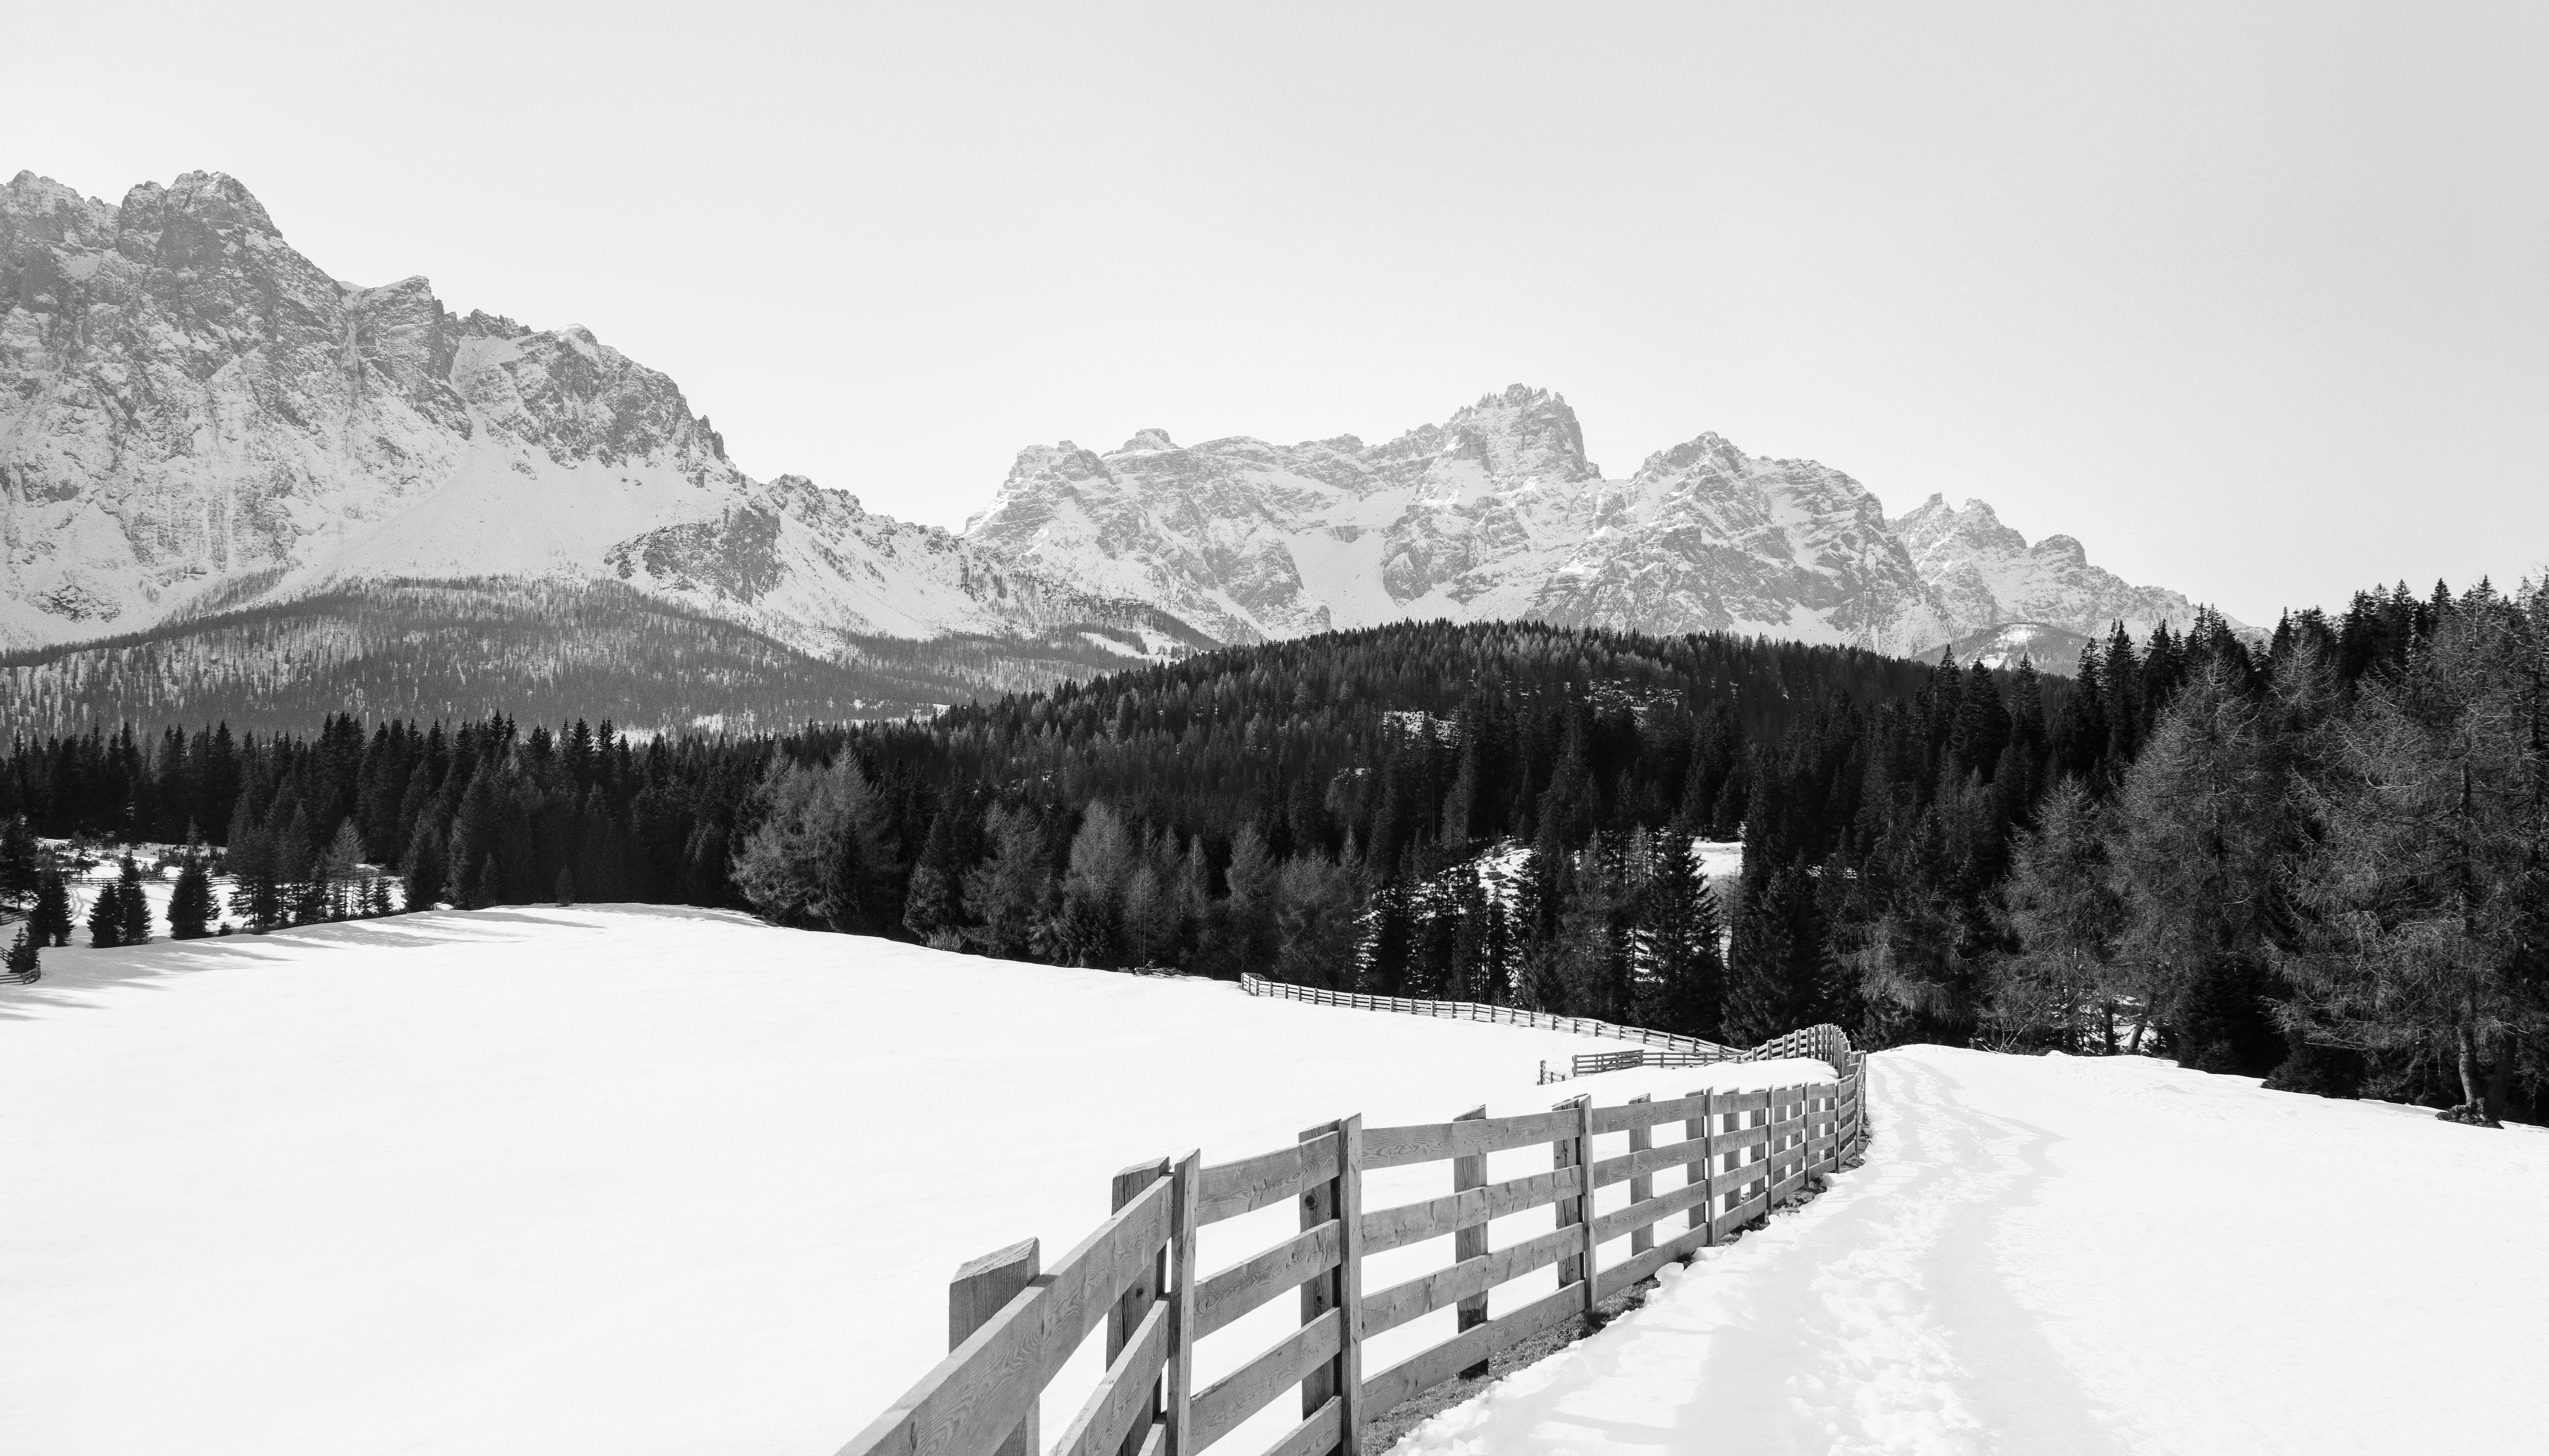 Dolomites No.2, Analogue Black and White Mountain Photography, Ltd. 20